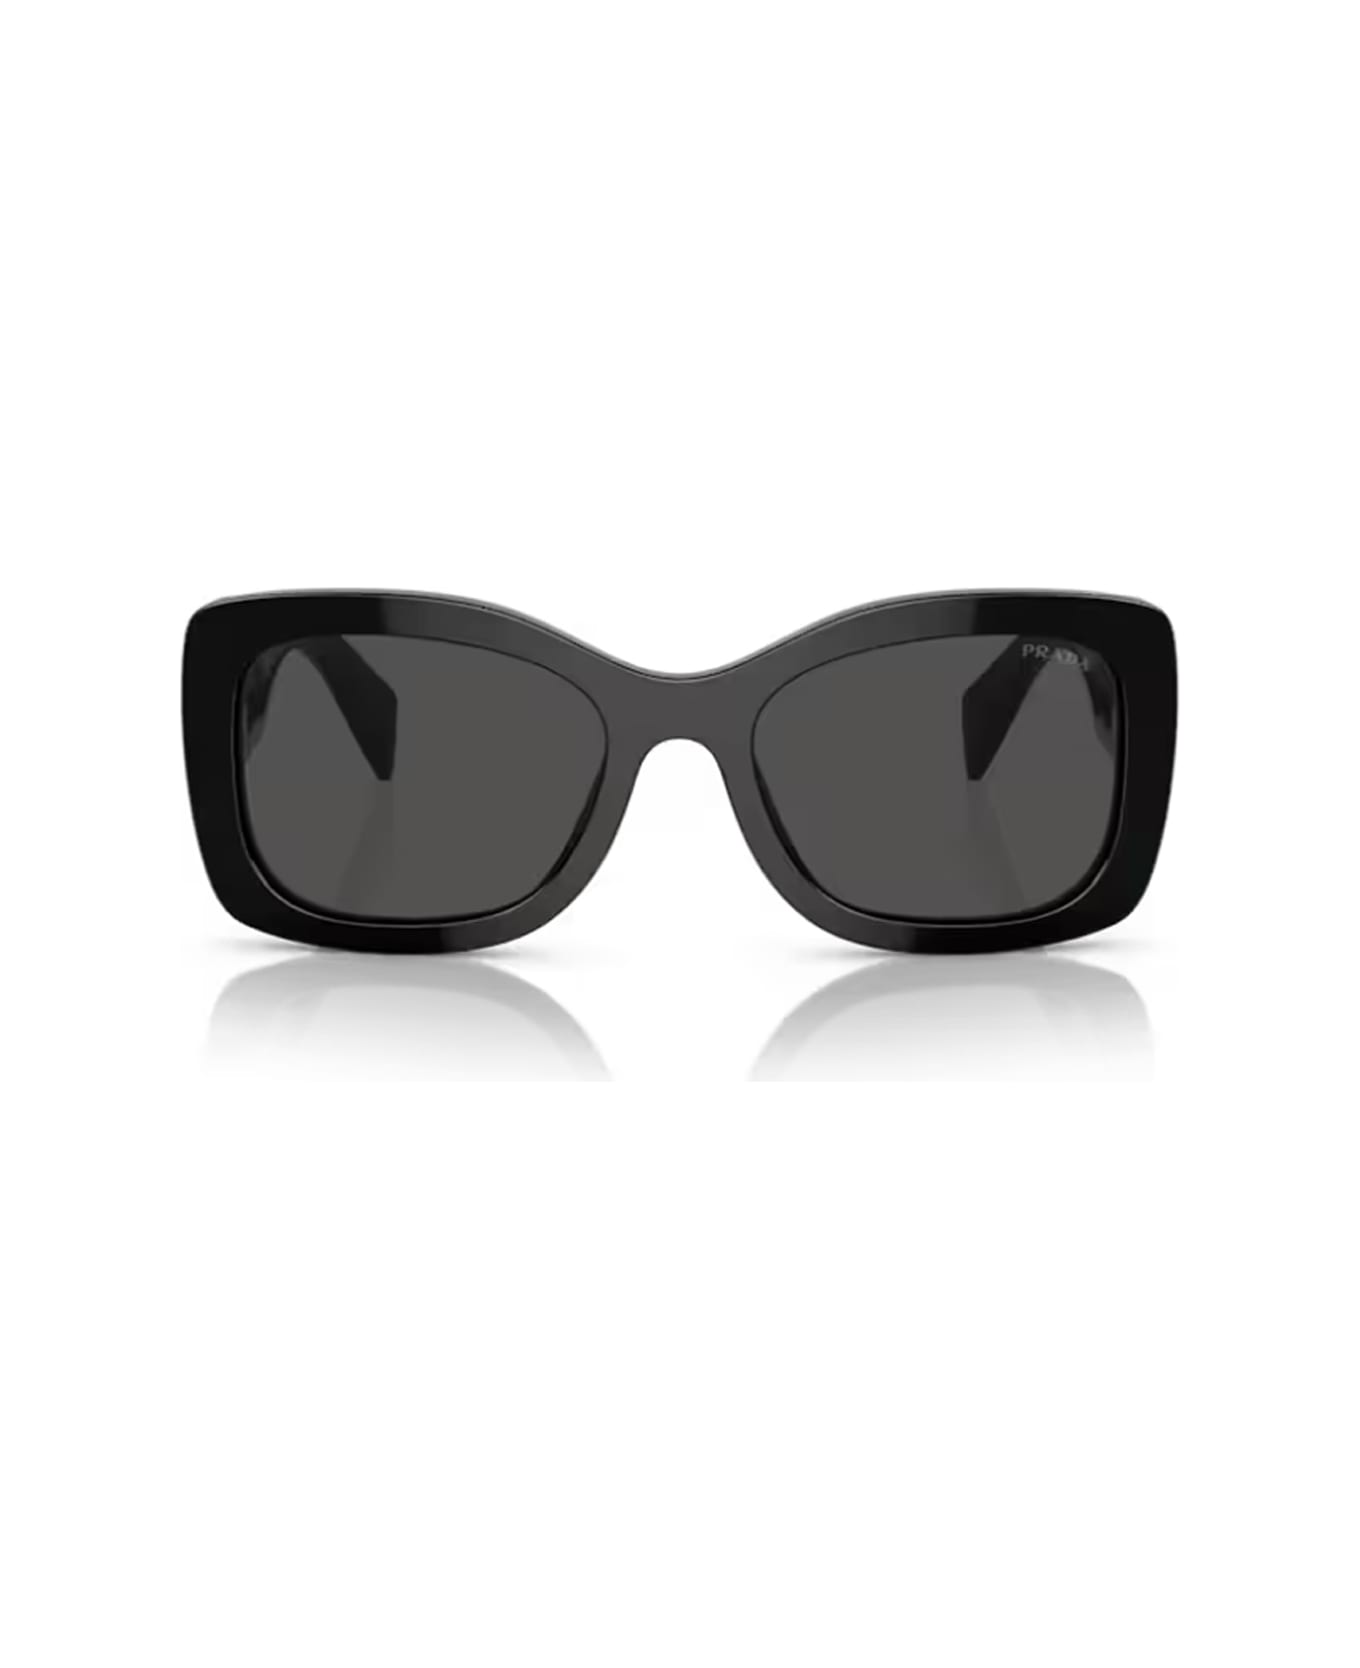 Prada Eyewear Pra08s 1ab5s0 Sunglasses - Nero